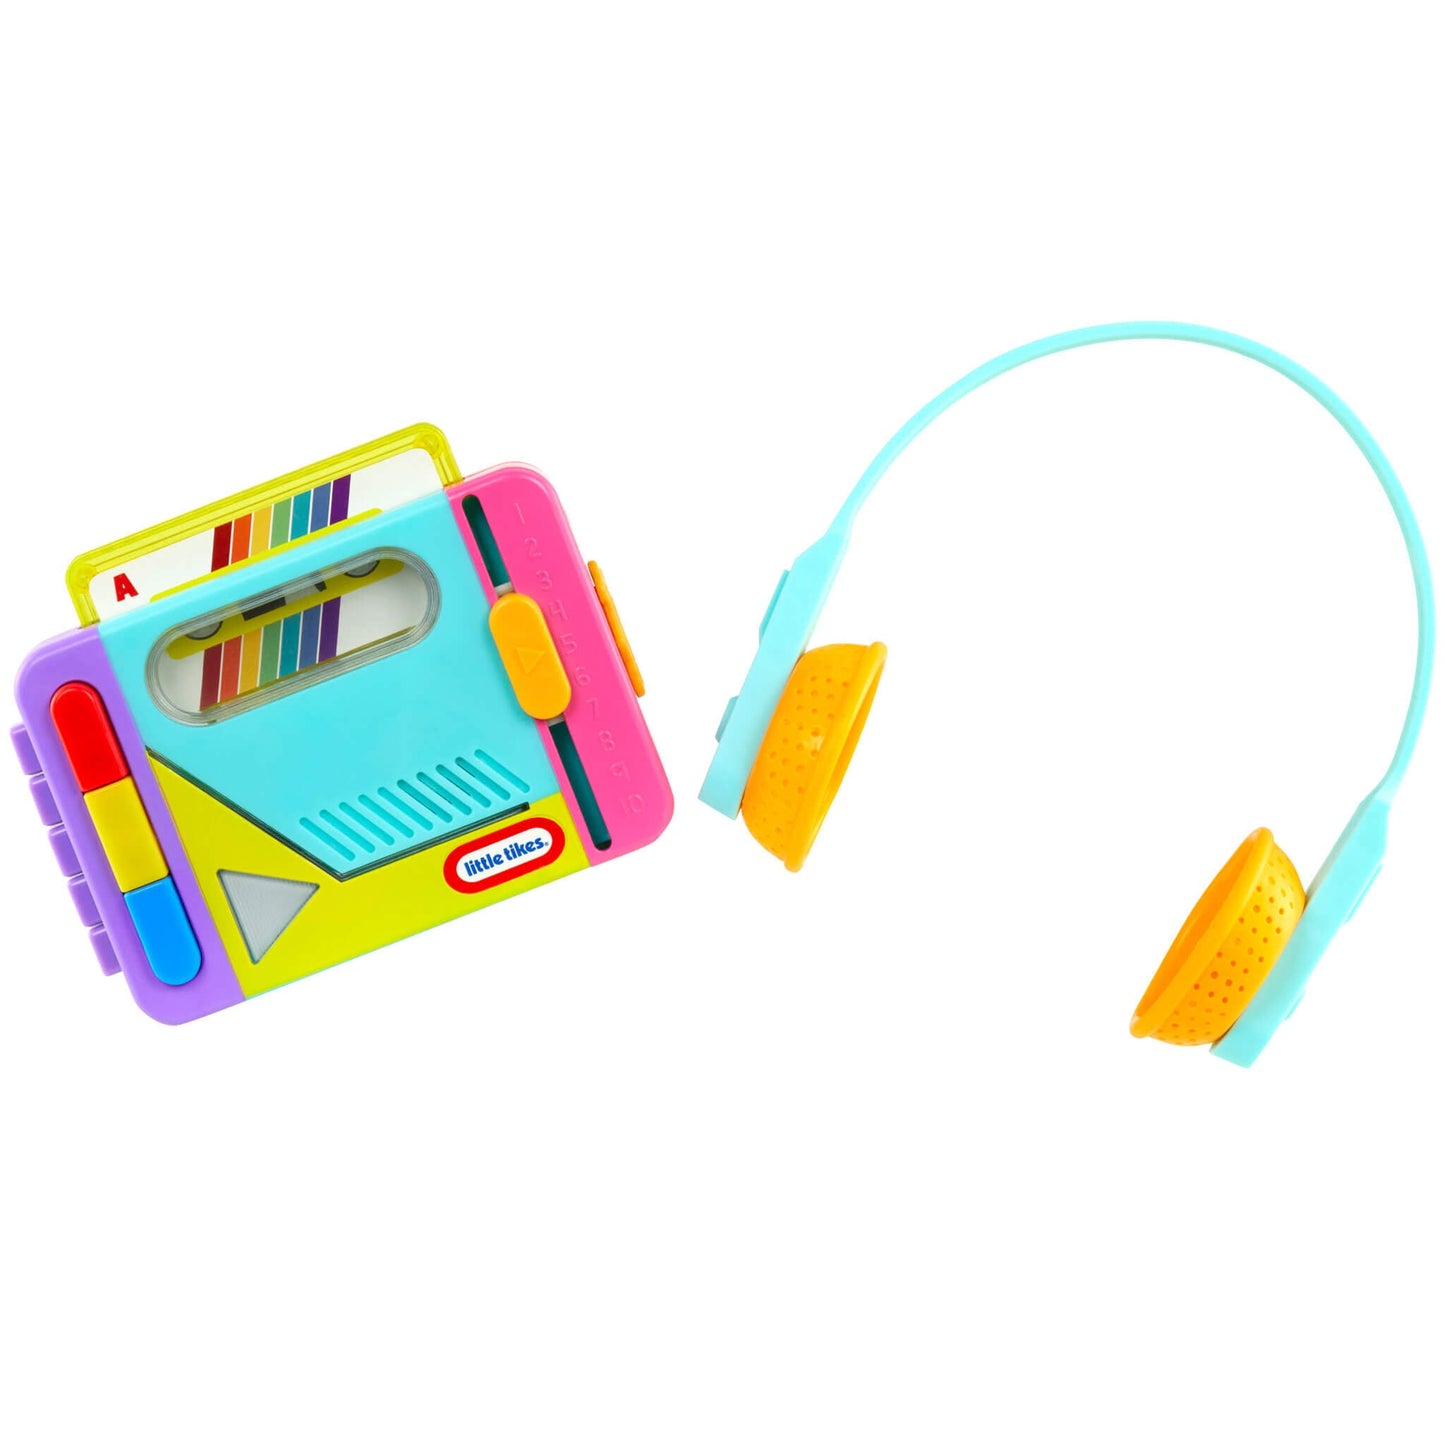 Little Tikes OLD SCHOOL™ Rainbow Remix Music Player